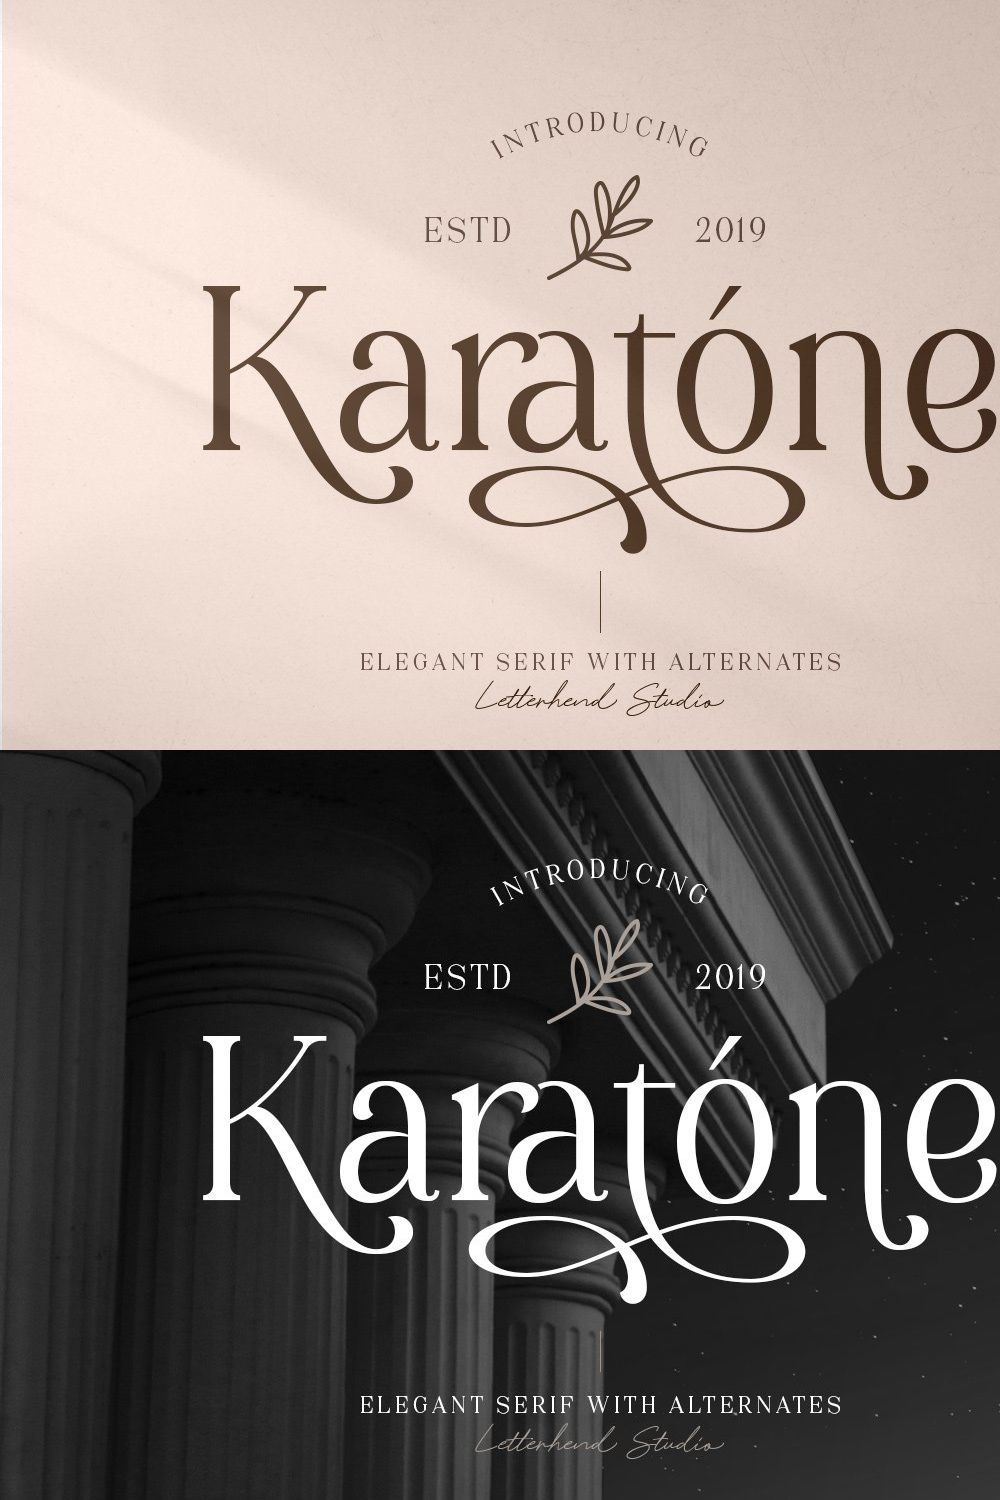 Karatone - Elegant Serif pinterest preview image.